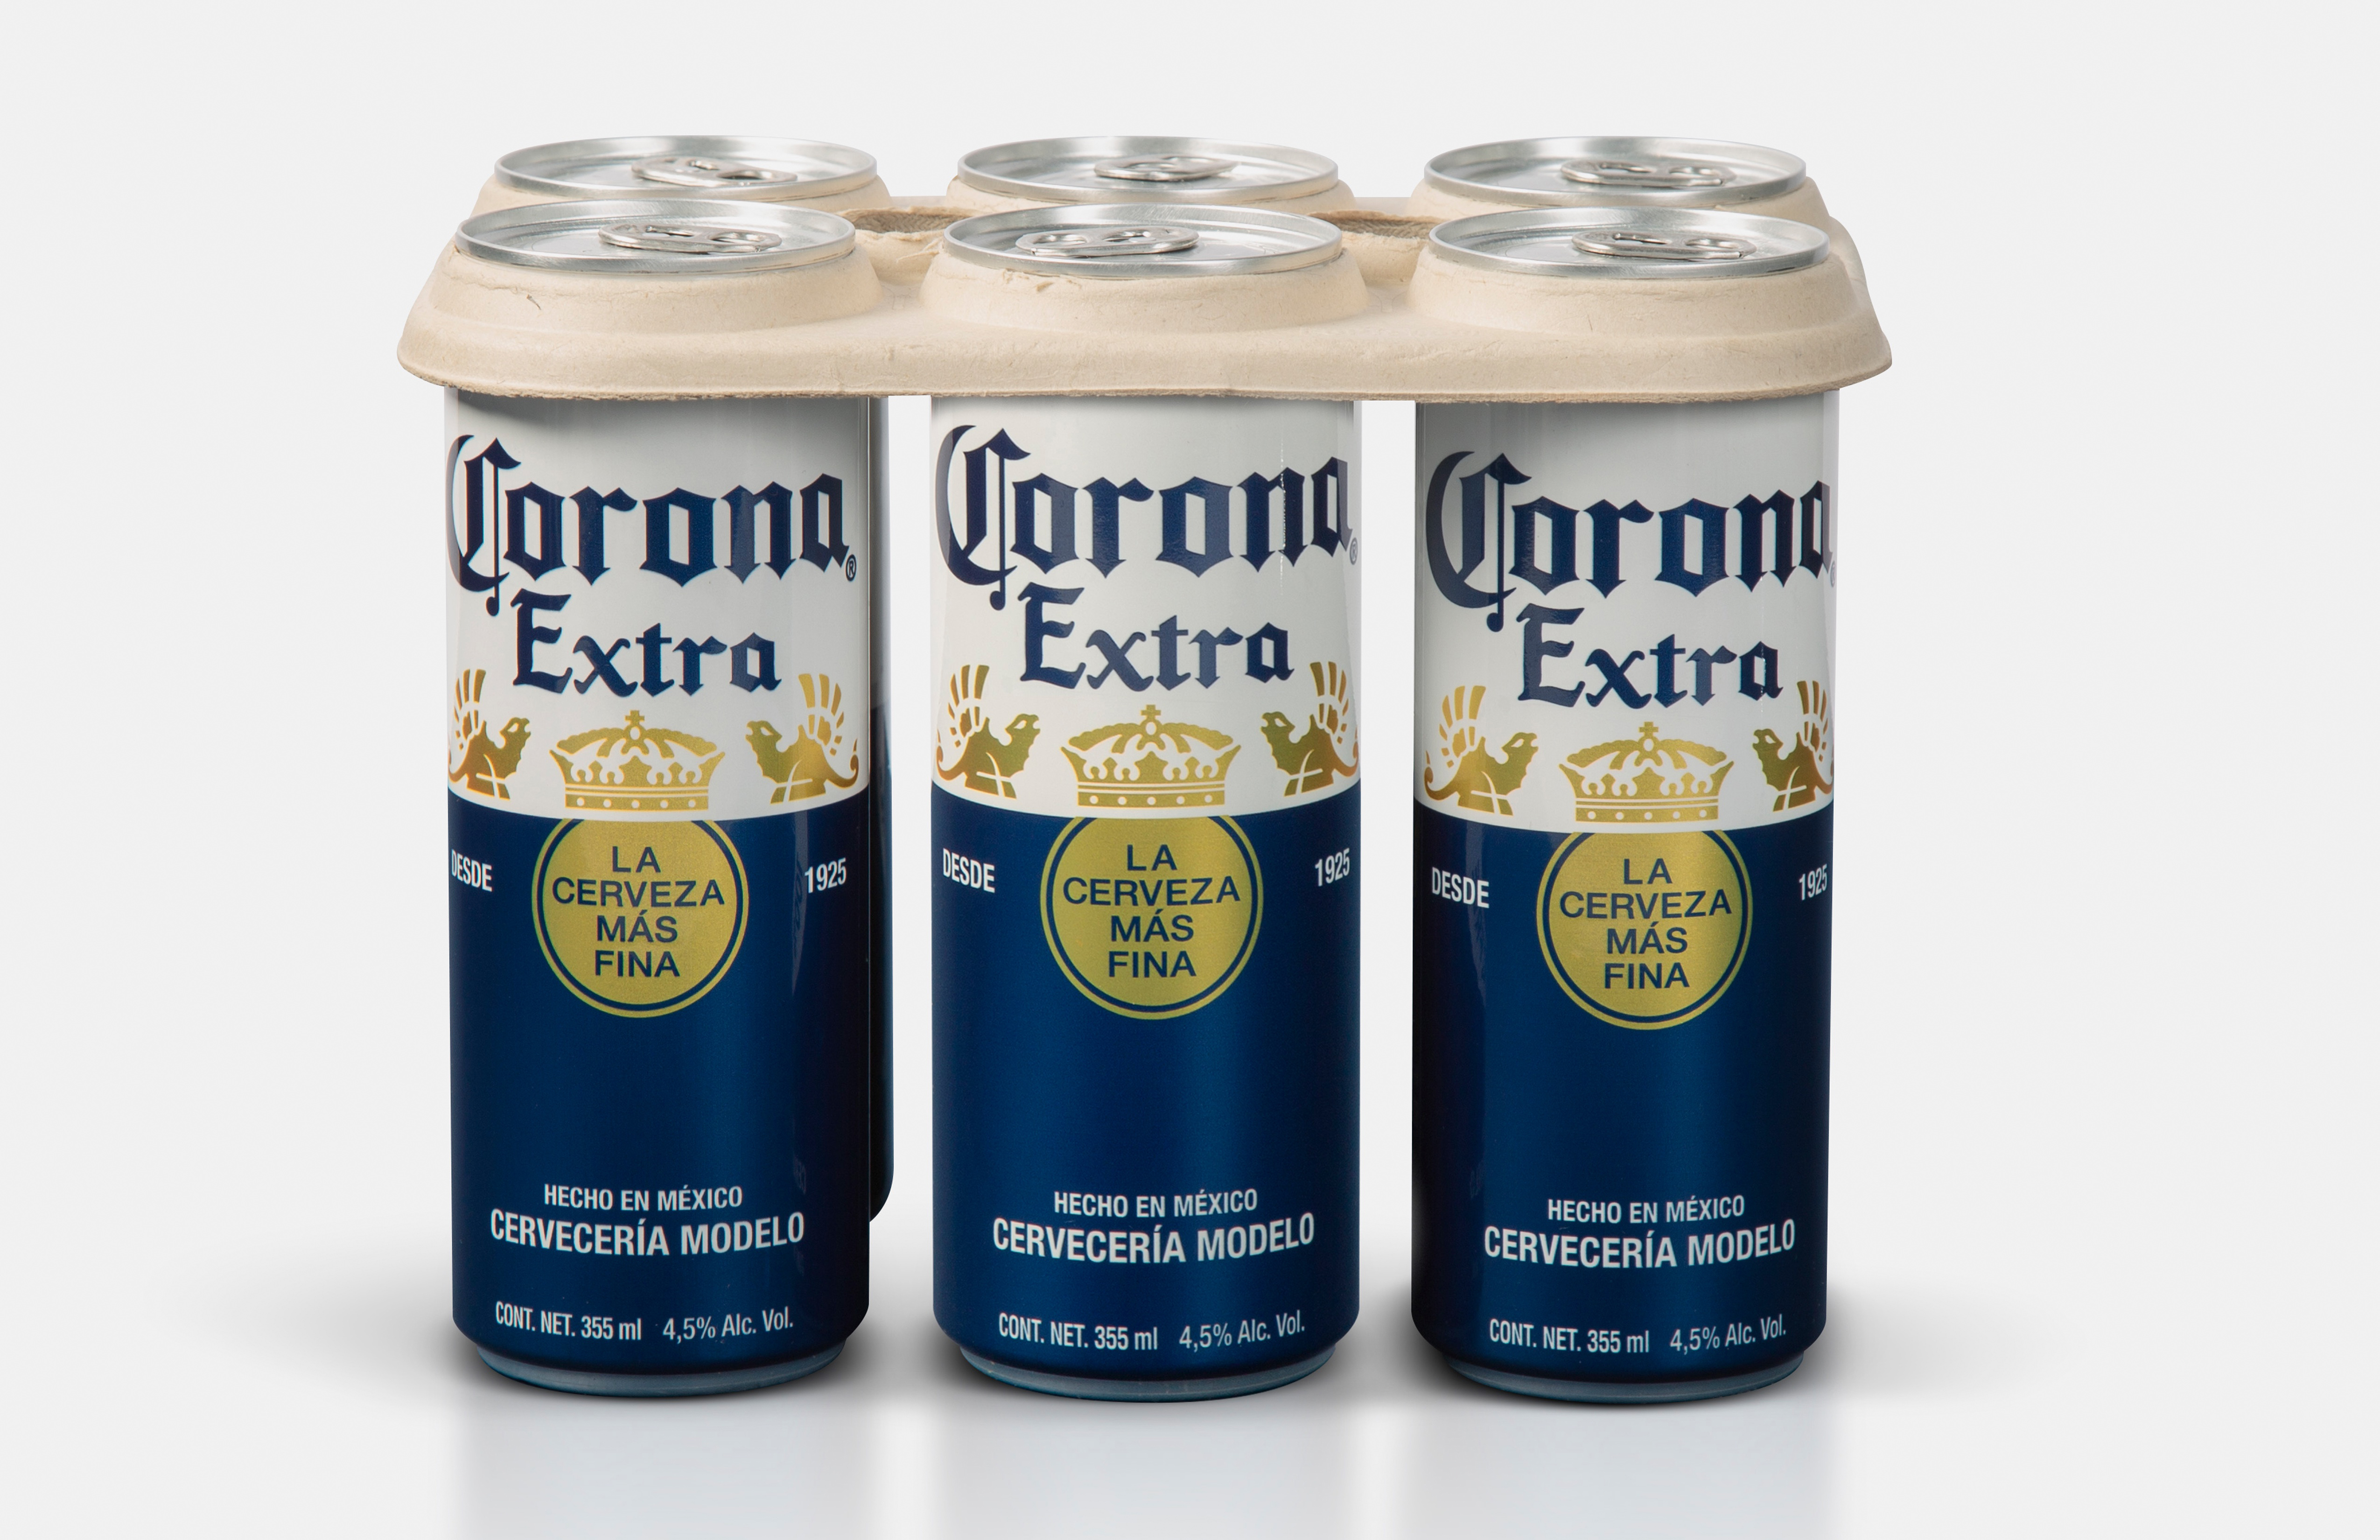 corona beer price in india